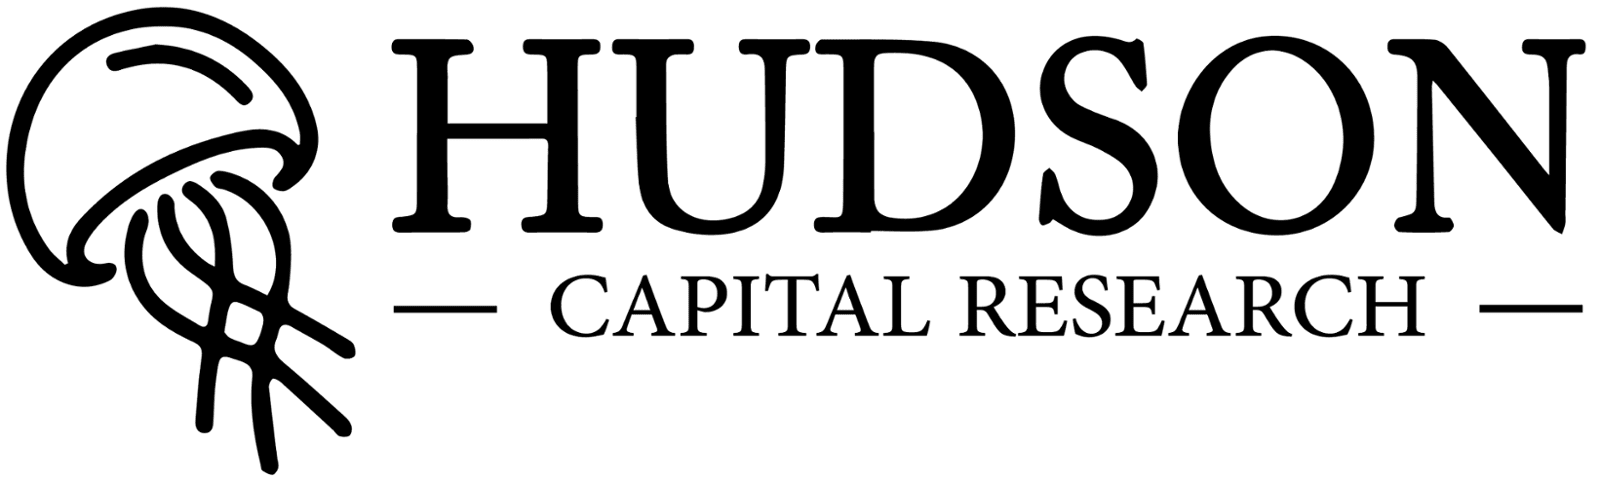 Hudson Capital Research